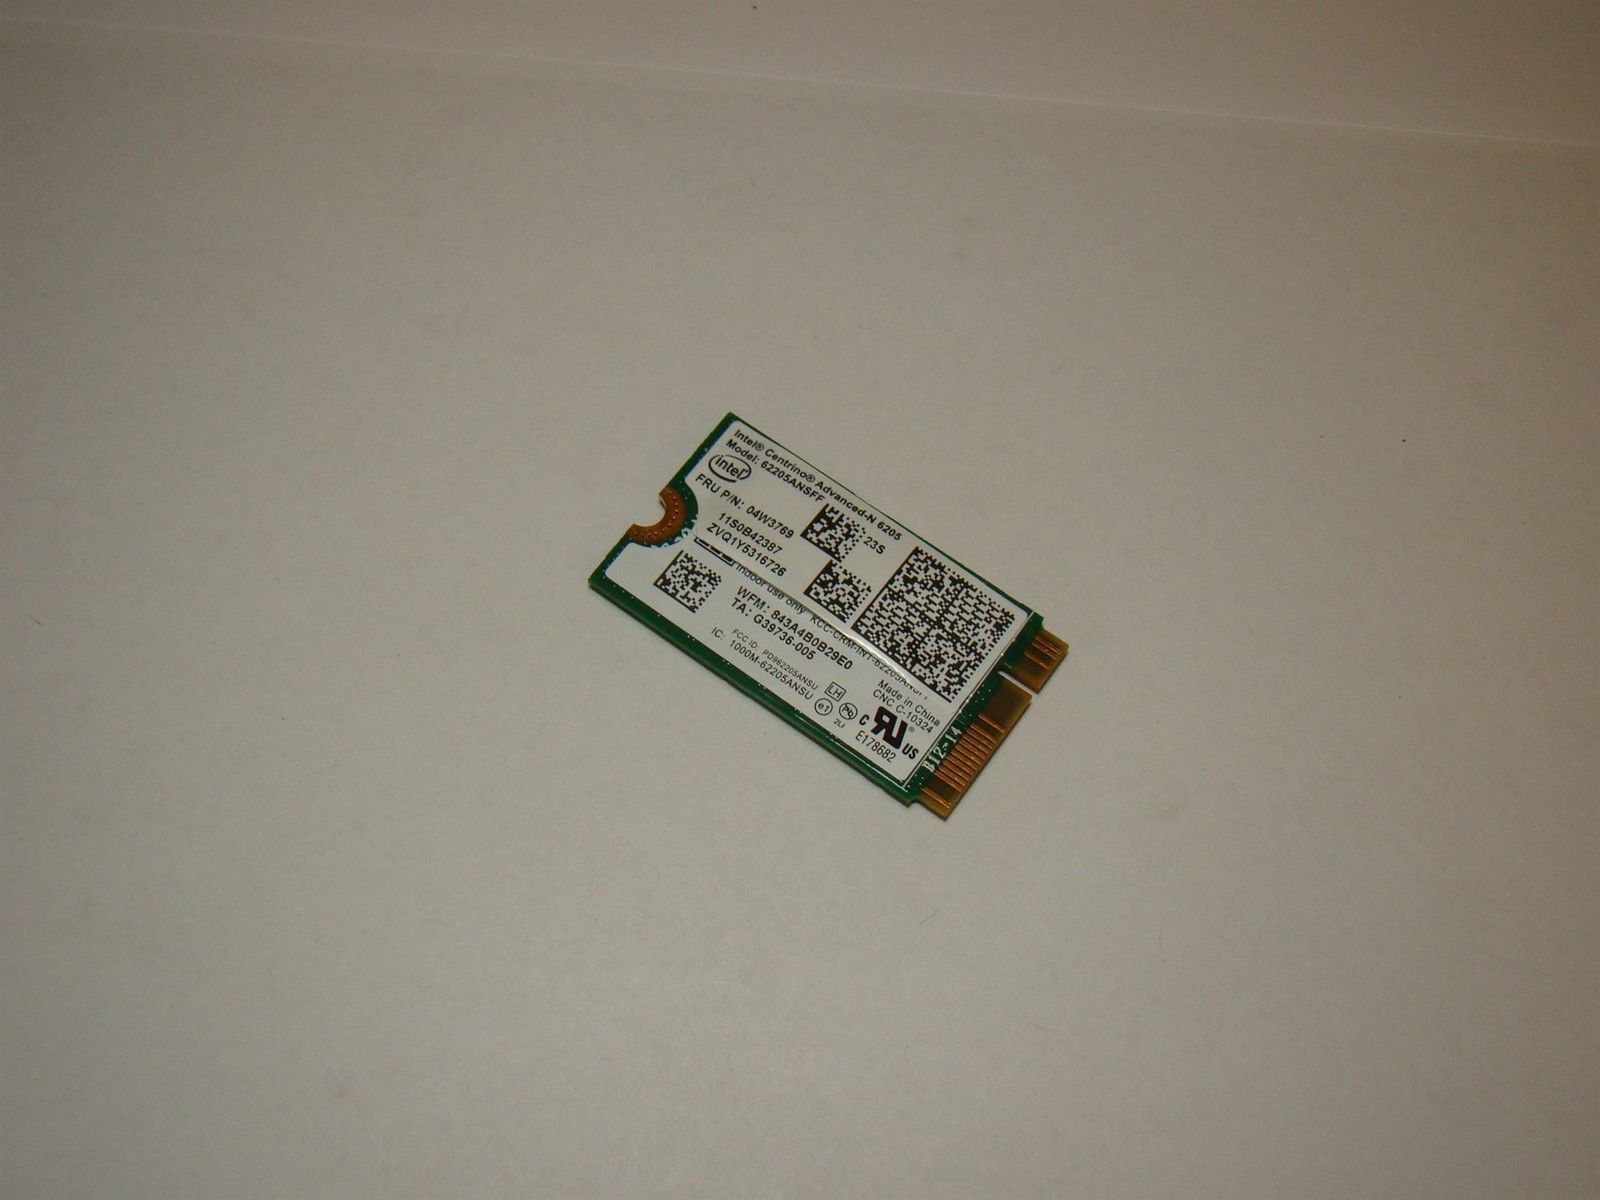 Lenovo ThinkPad X1 Carbon 04W3769 WiFi lan Adapter WIRELESS CARD 62205ANSFF 